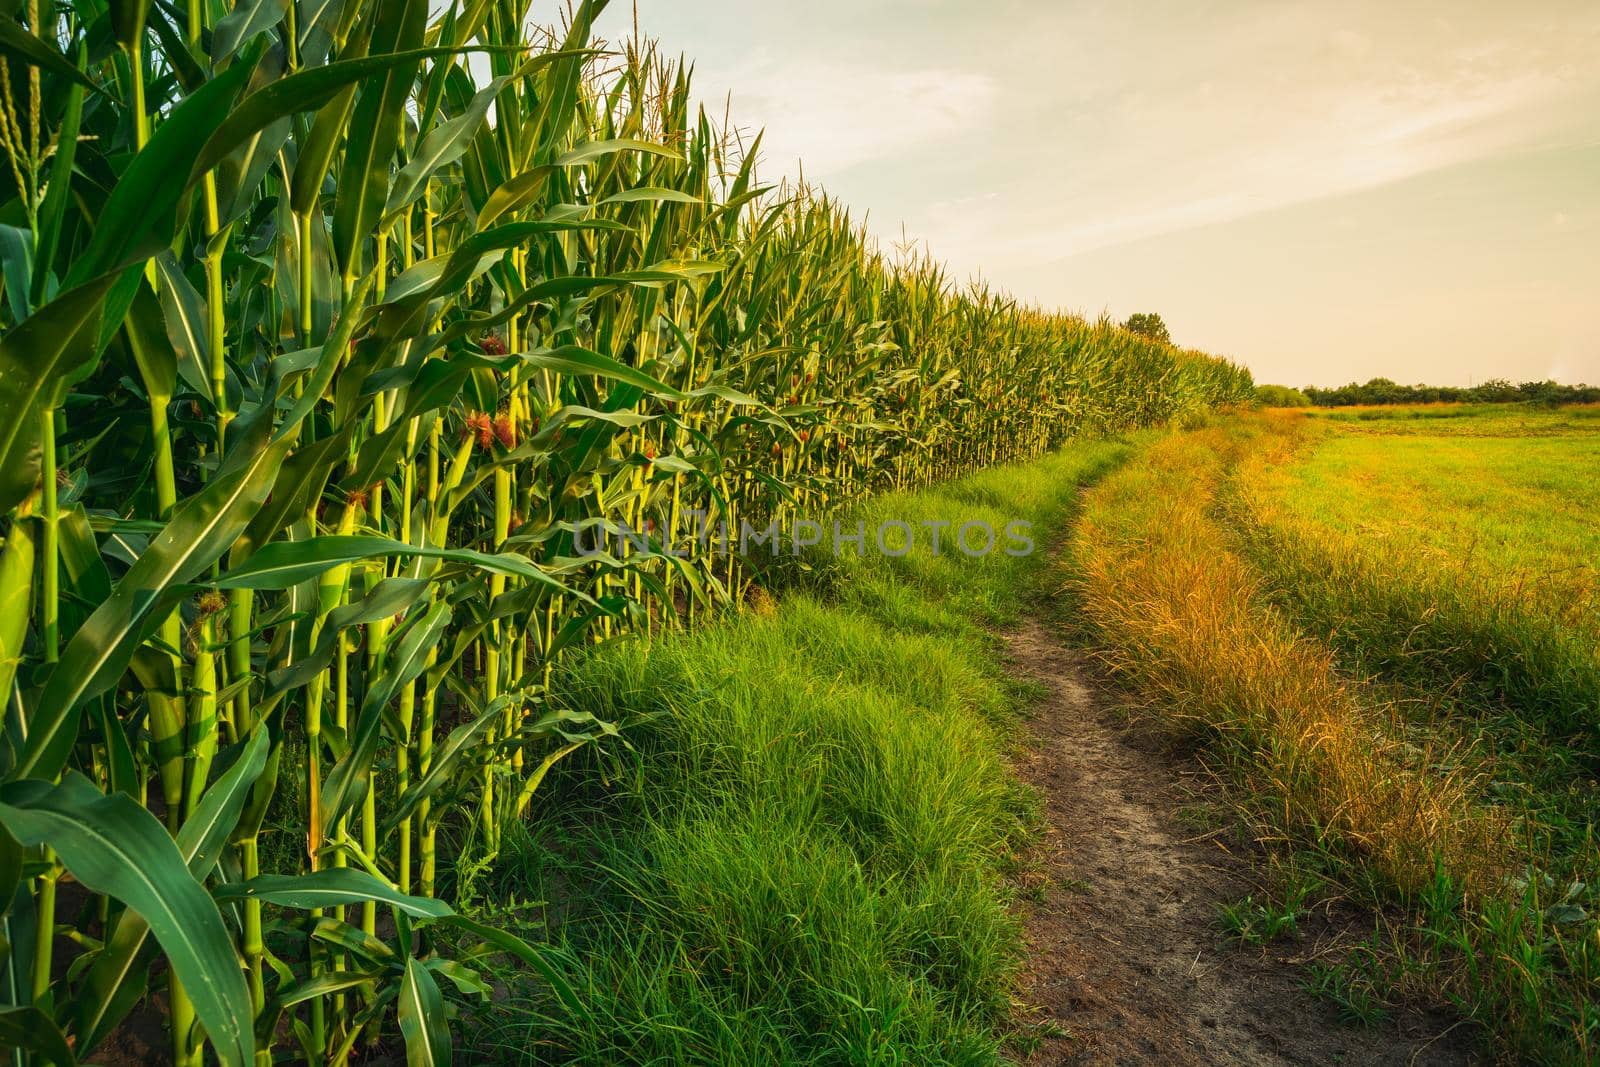 A corn field by a dirt road, summer rural view